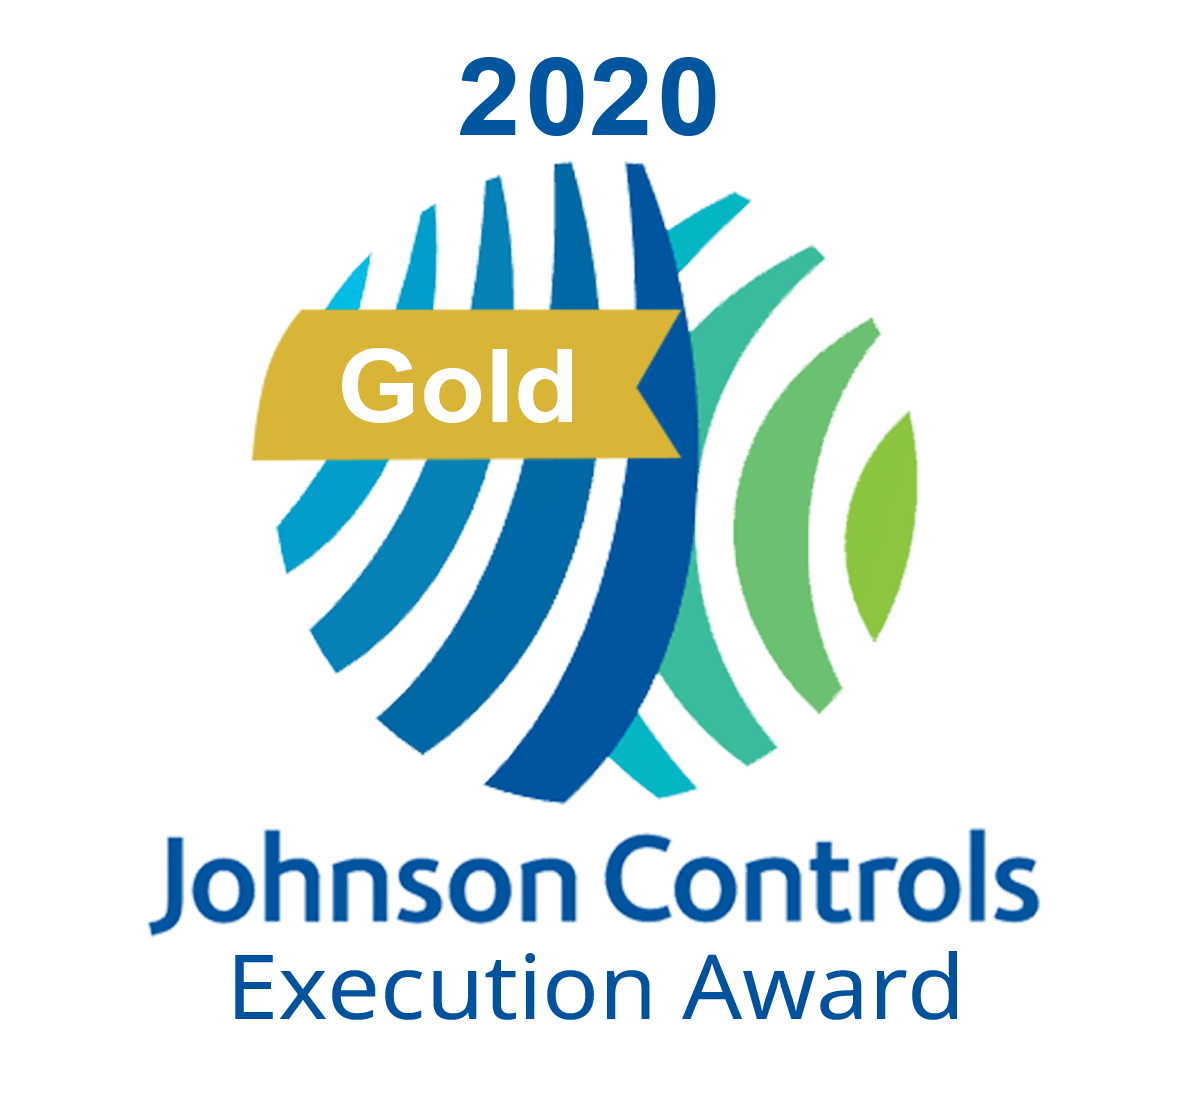 johnson-controls-Gold-execution-award-2020